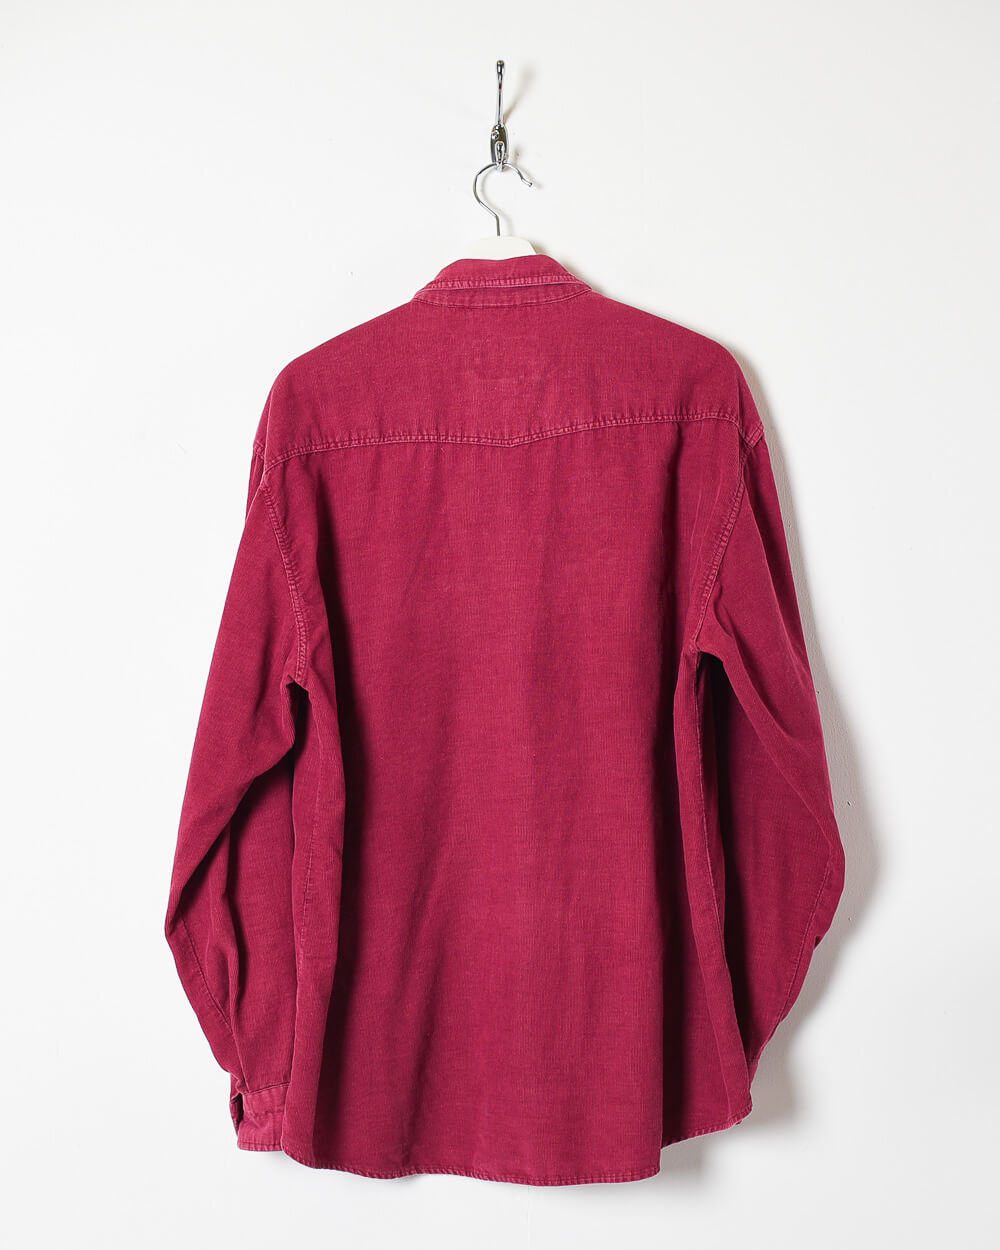 Red Vintage Corduroy Shirt - X-Large